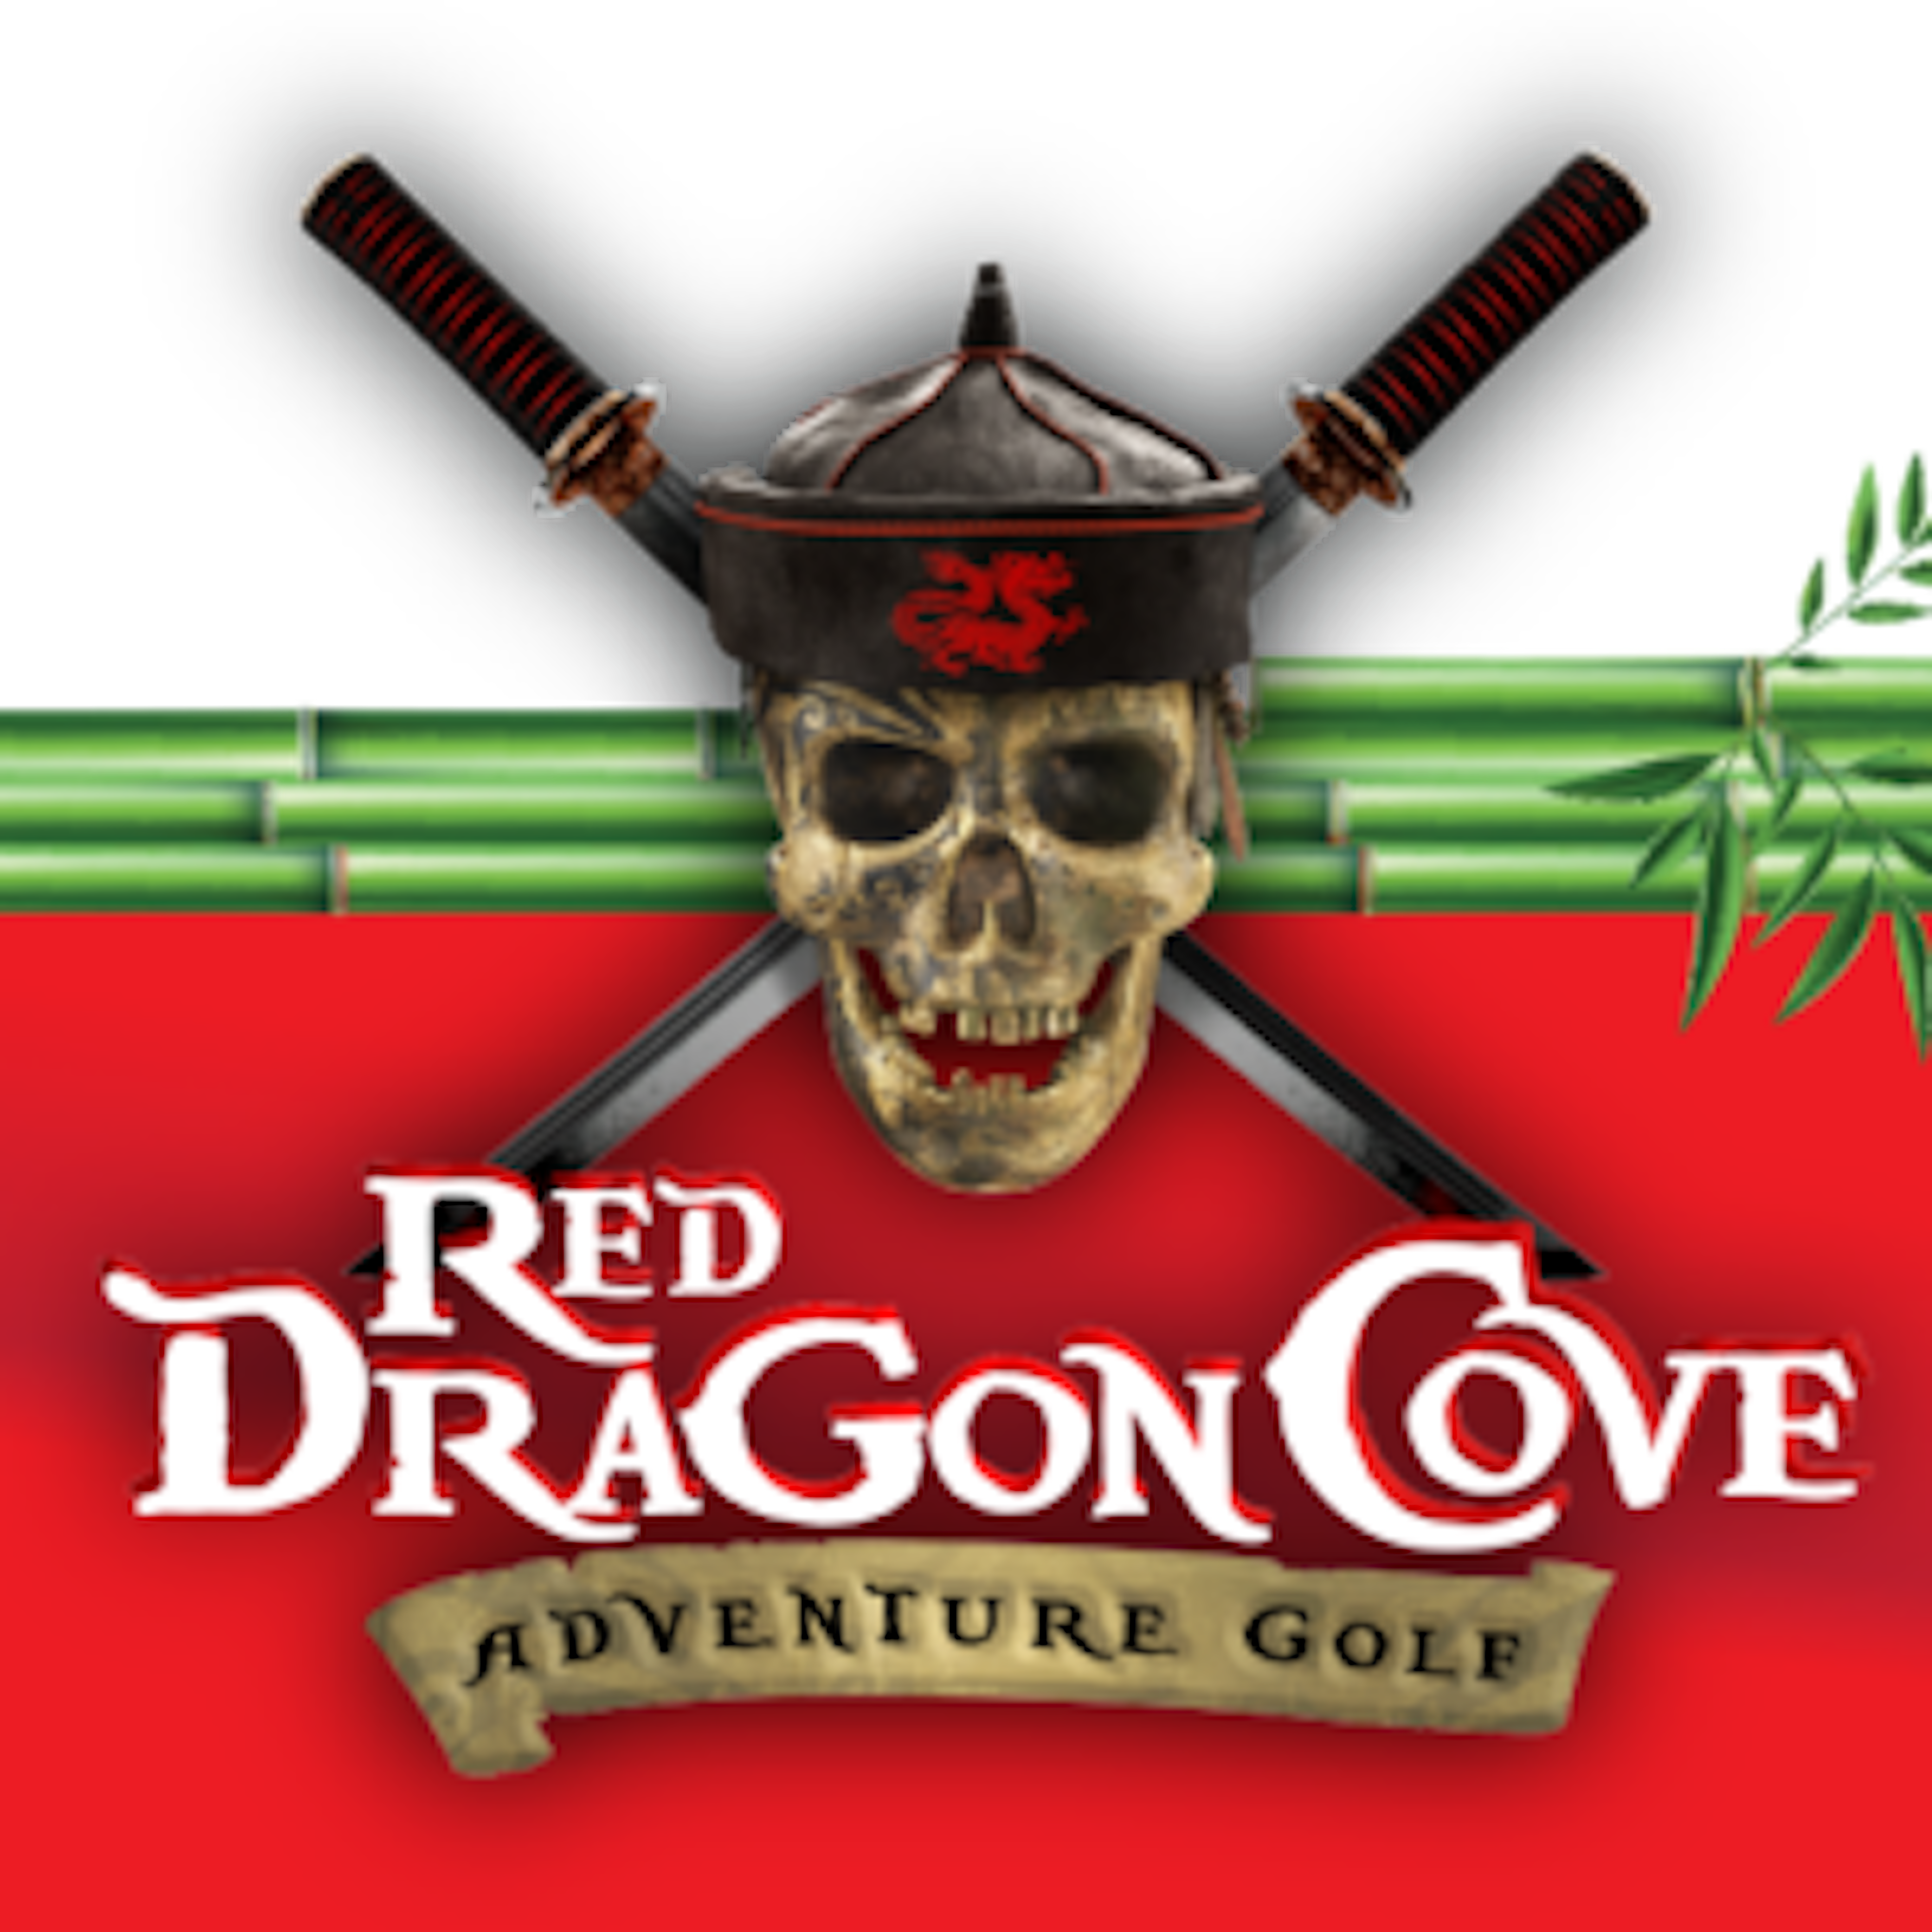 Red Dragon Cove Adventure Golf